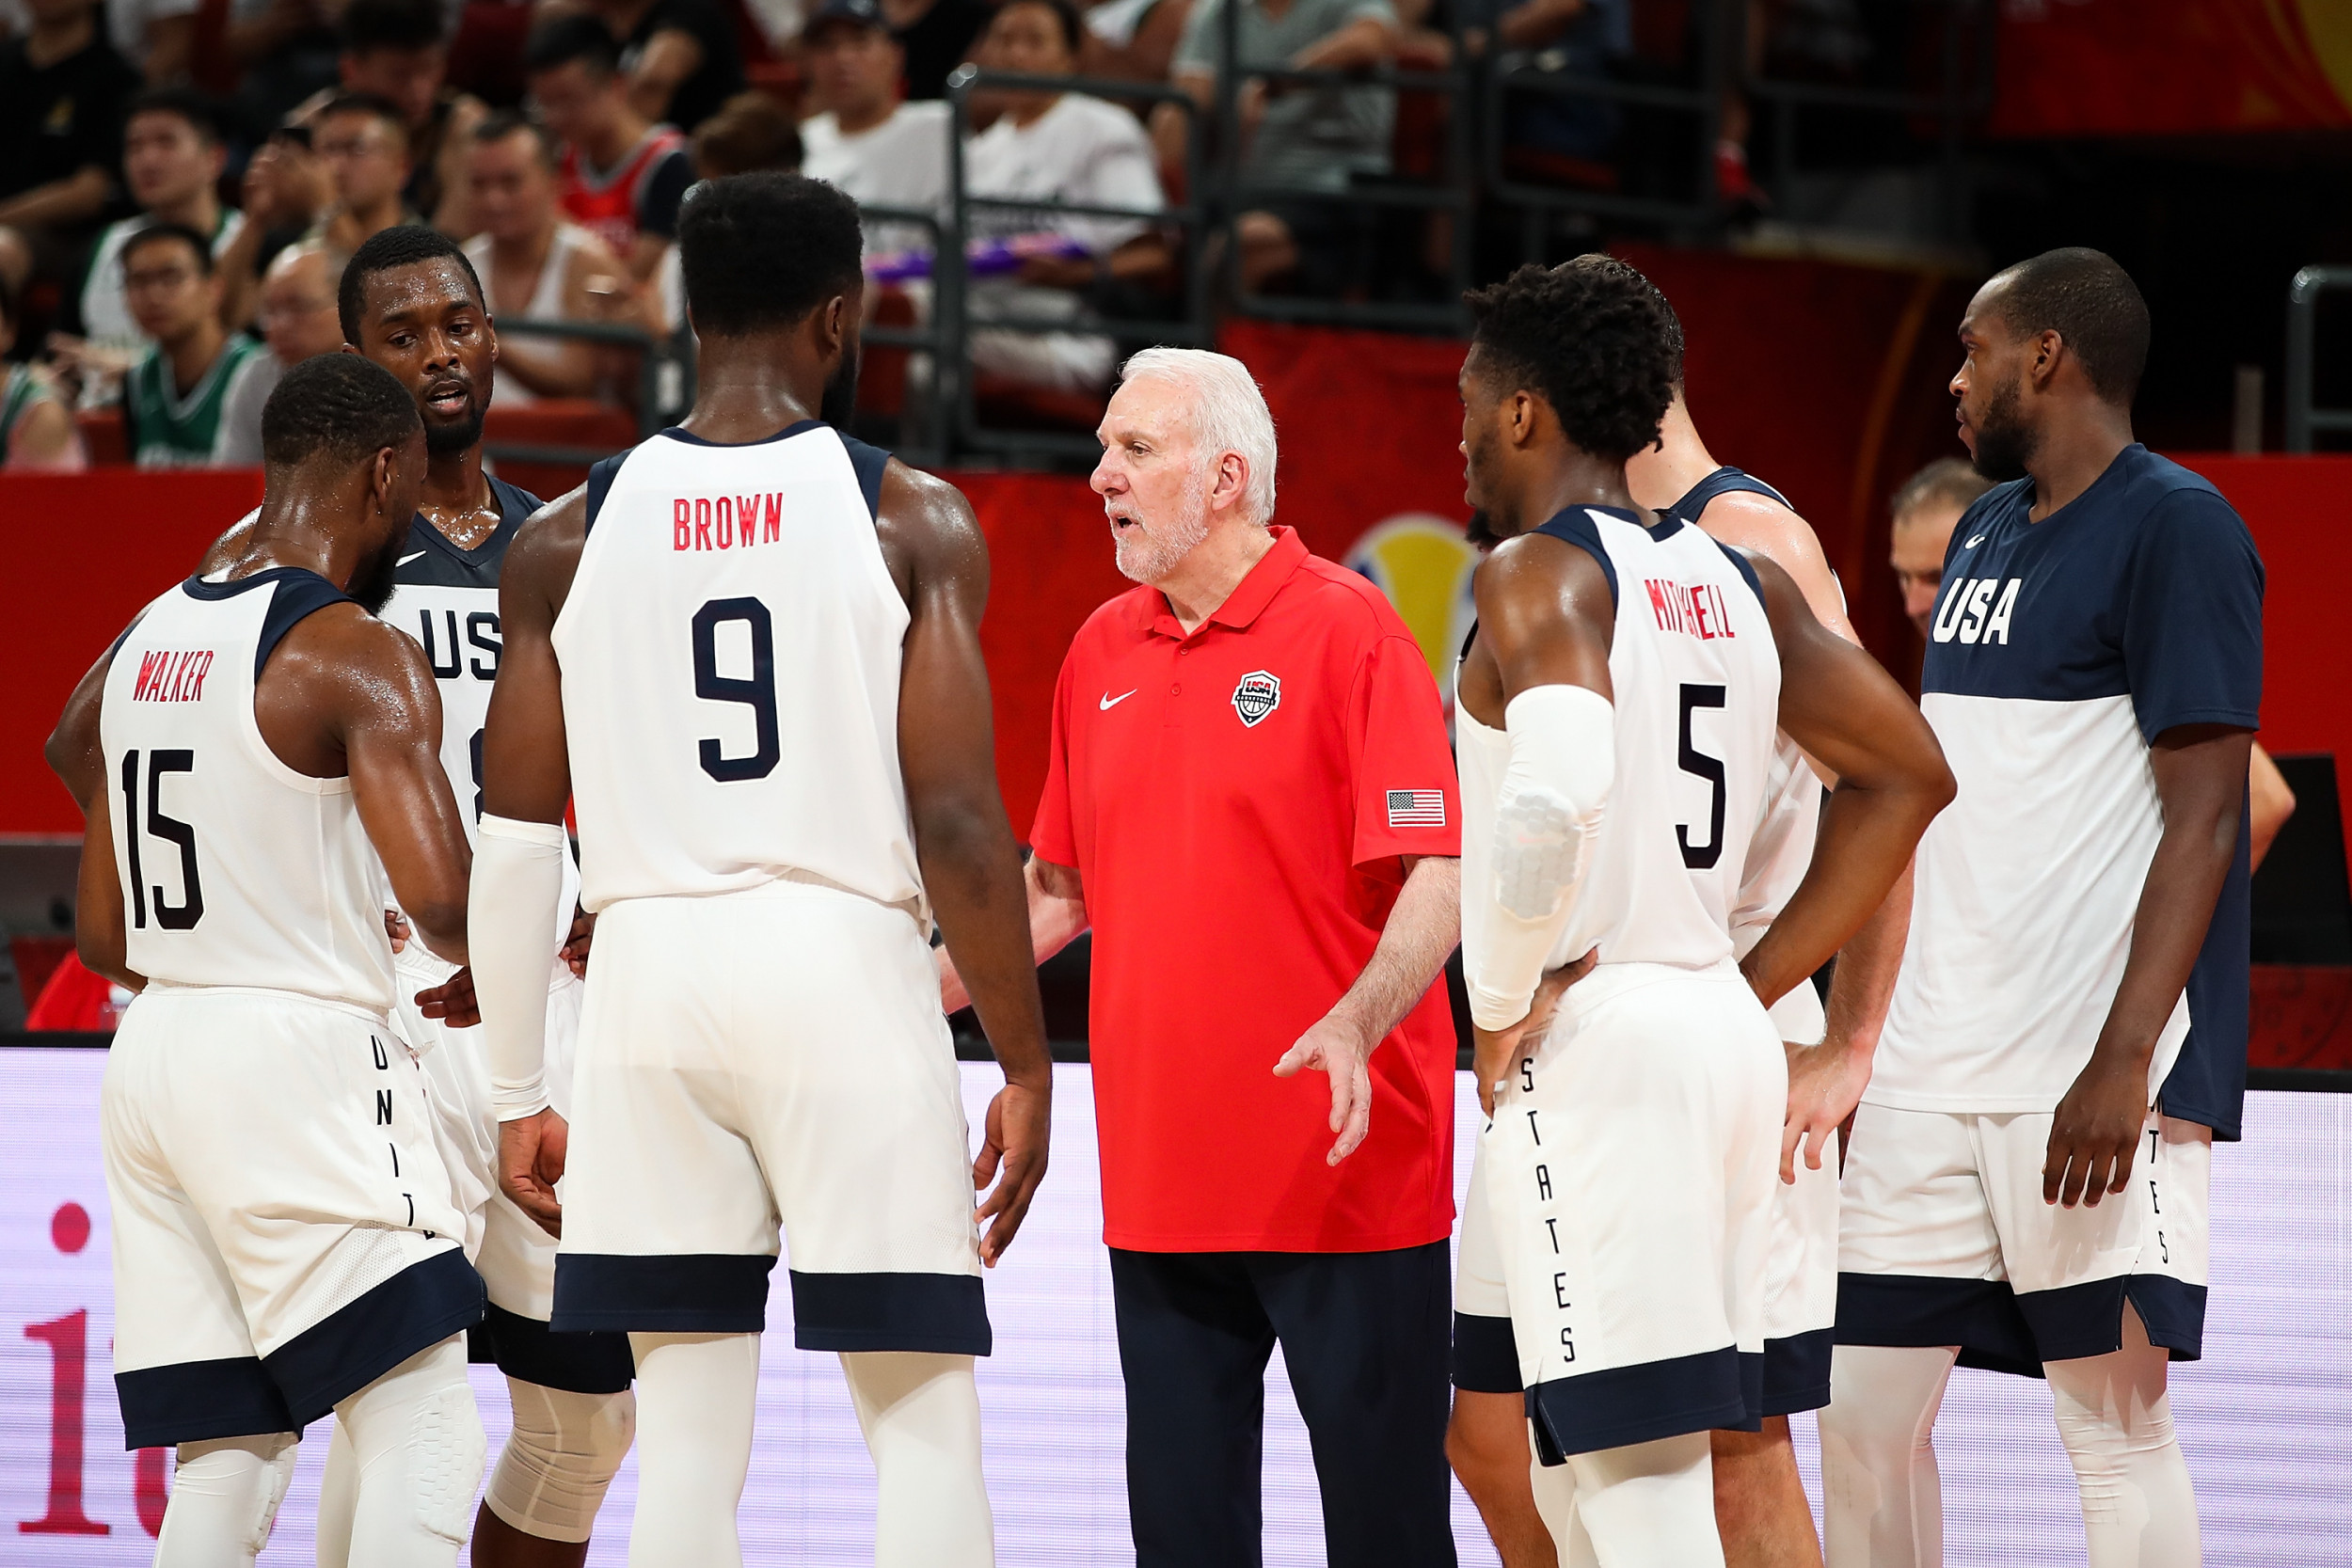 FIBA Basketball World Cup 2019 Where to Watch Team USA vs